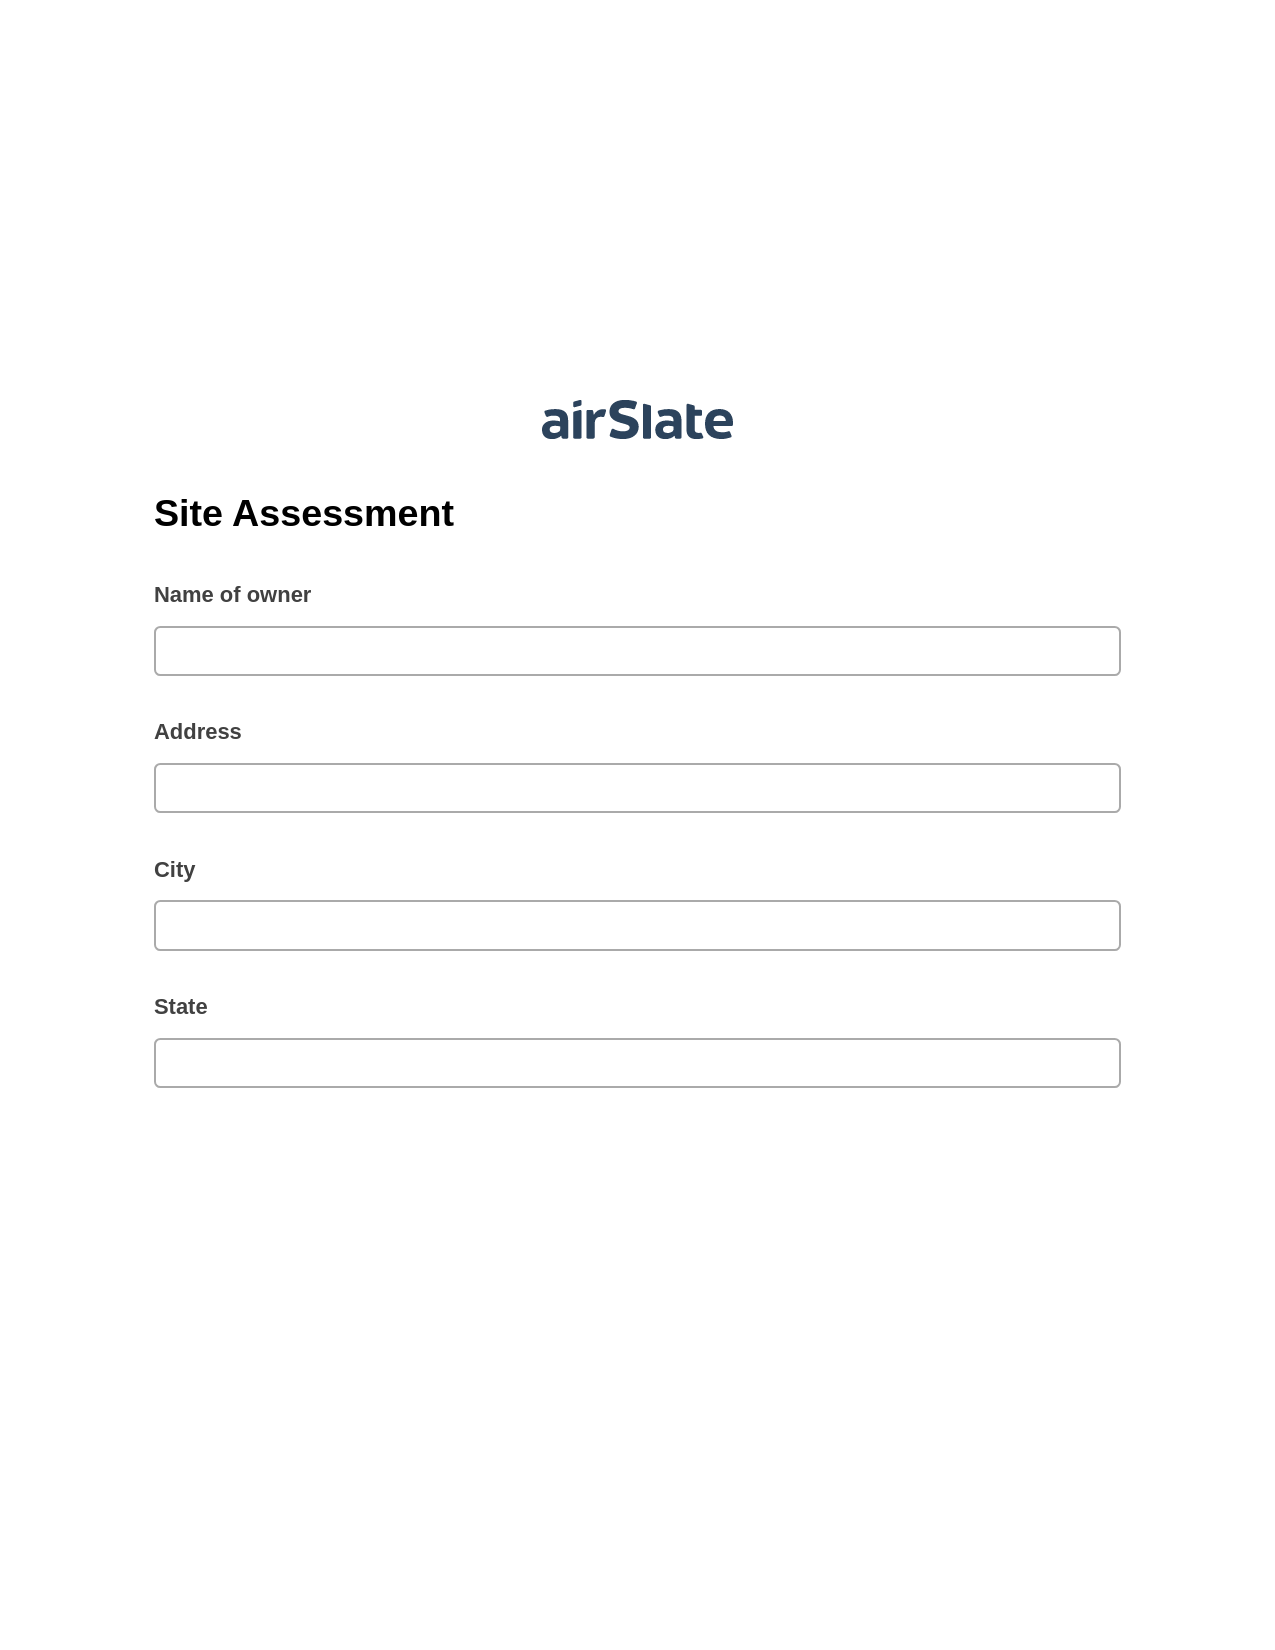 Site Assessment Pre-fill from Google Sheets Bot, Invoke Salesforce Process Bot, Export to Smartsheet